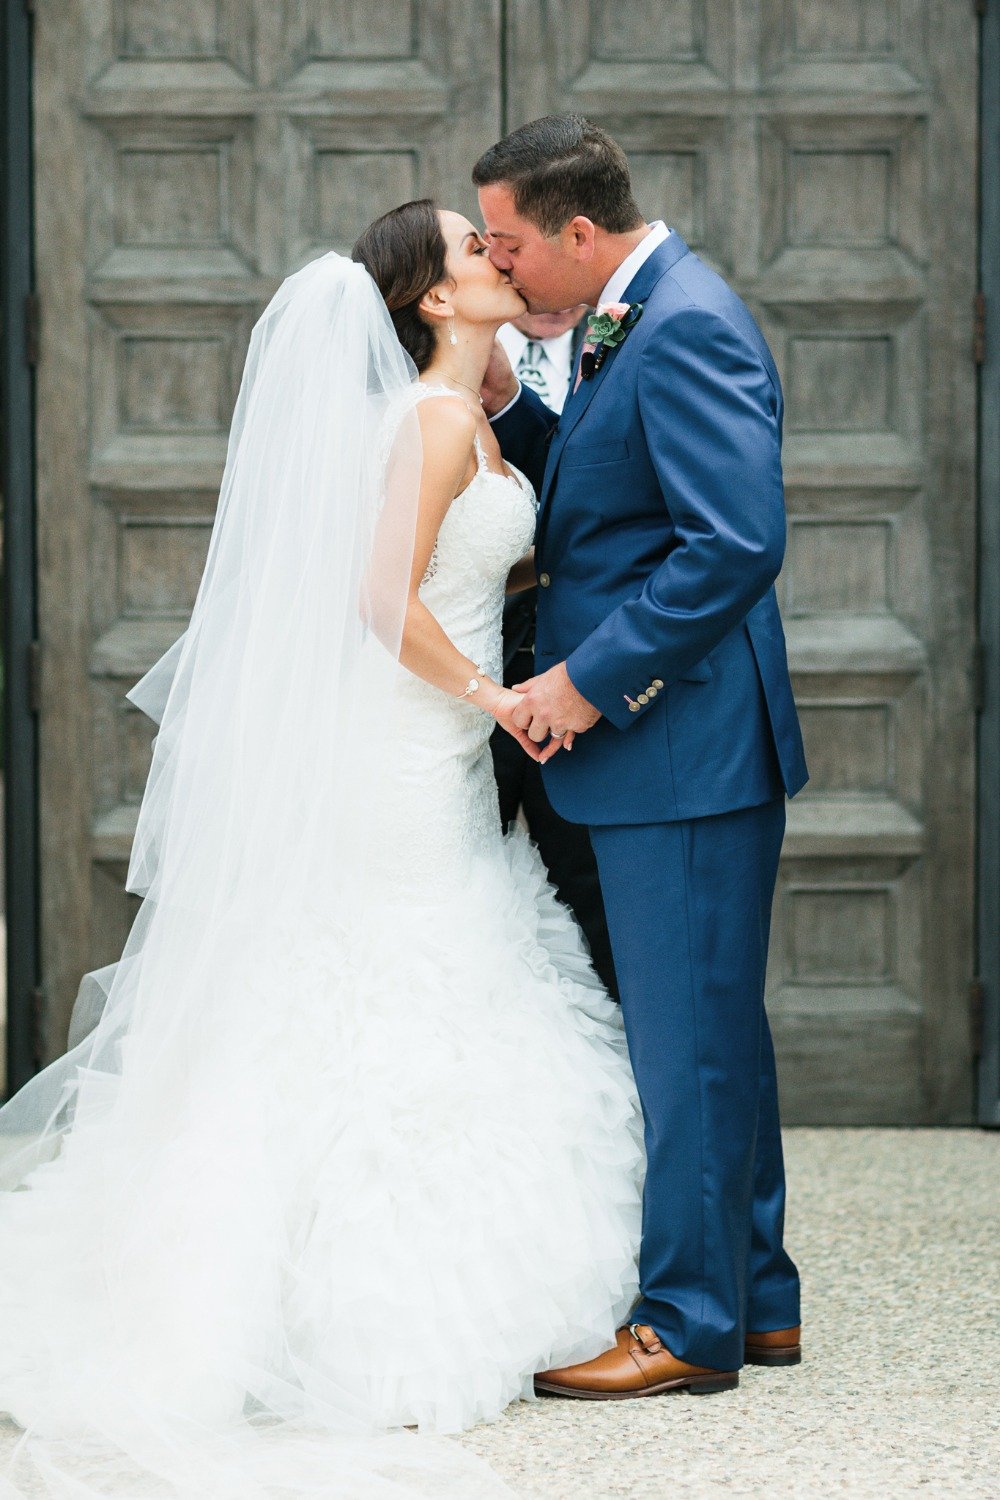 Ceremony wedding kiss